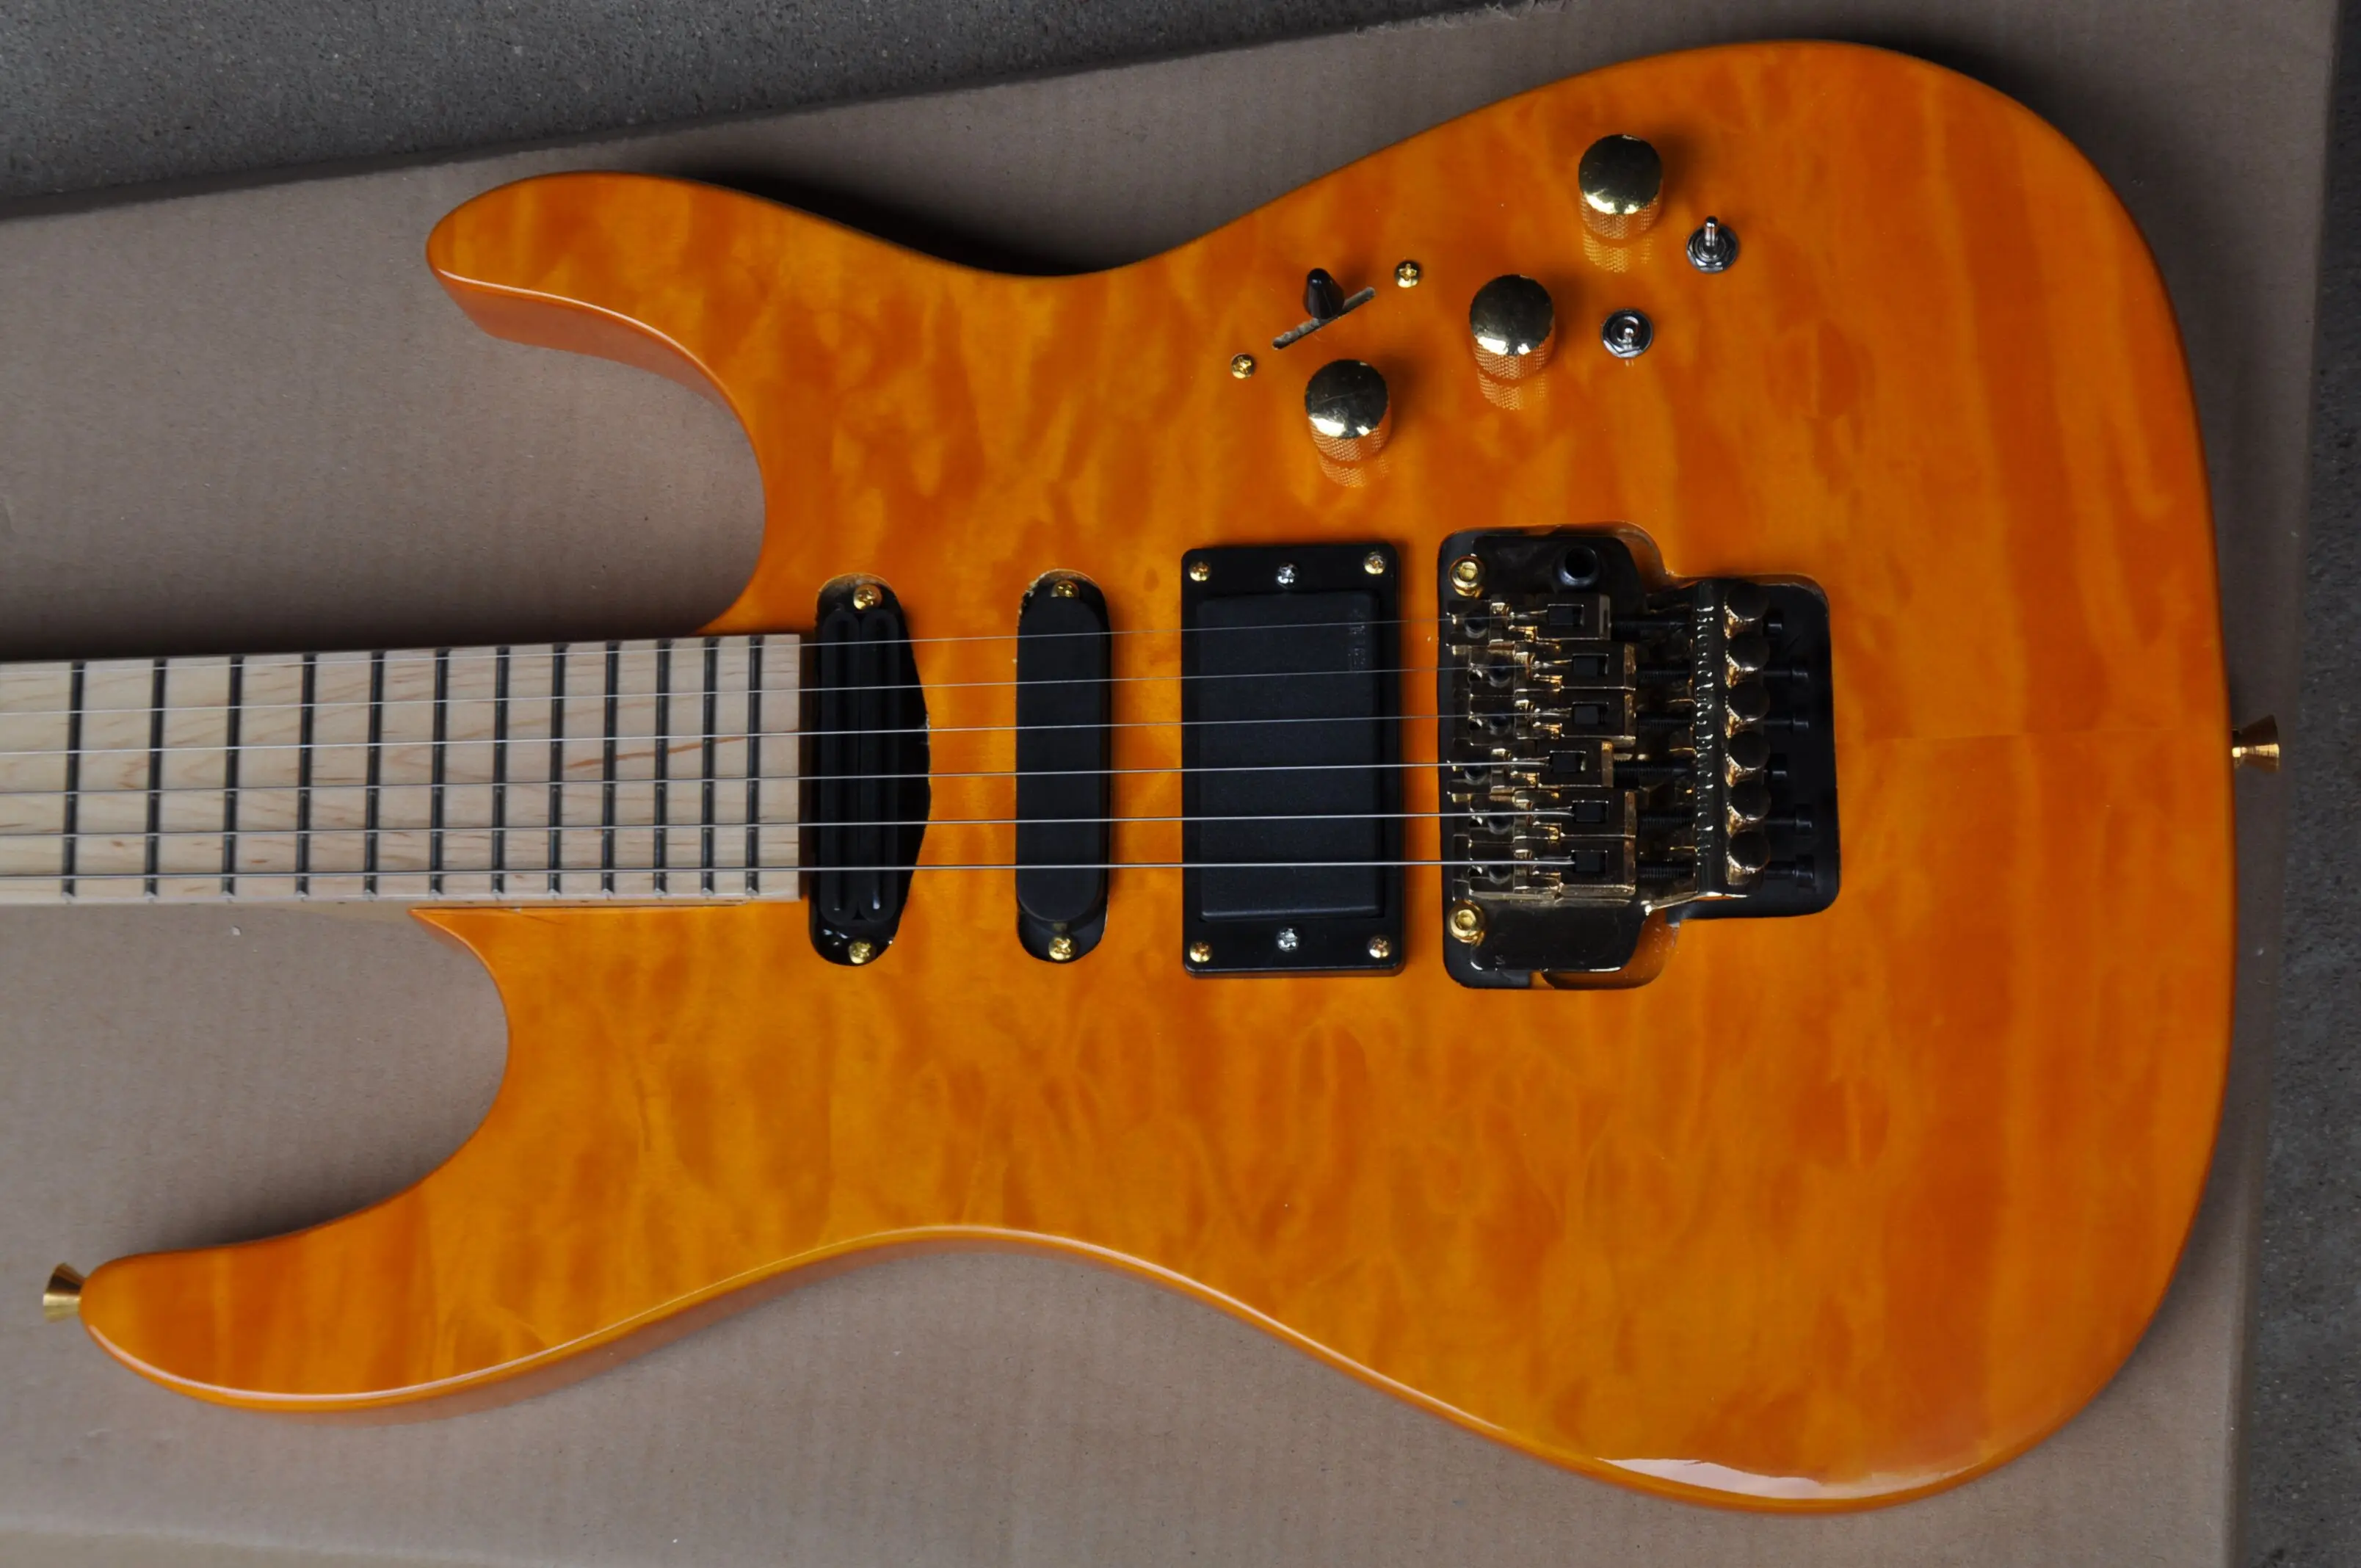 

Custom PC1 Phil Collen Qulit Maple Top Yellow Orange Electric Guitar Maple Fingerboard No Inlay, Floyd Rose Tremolo